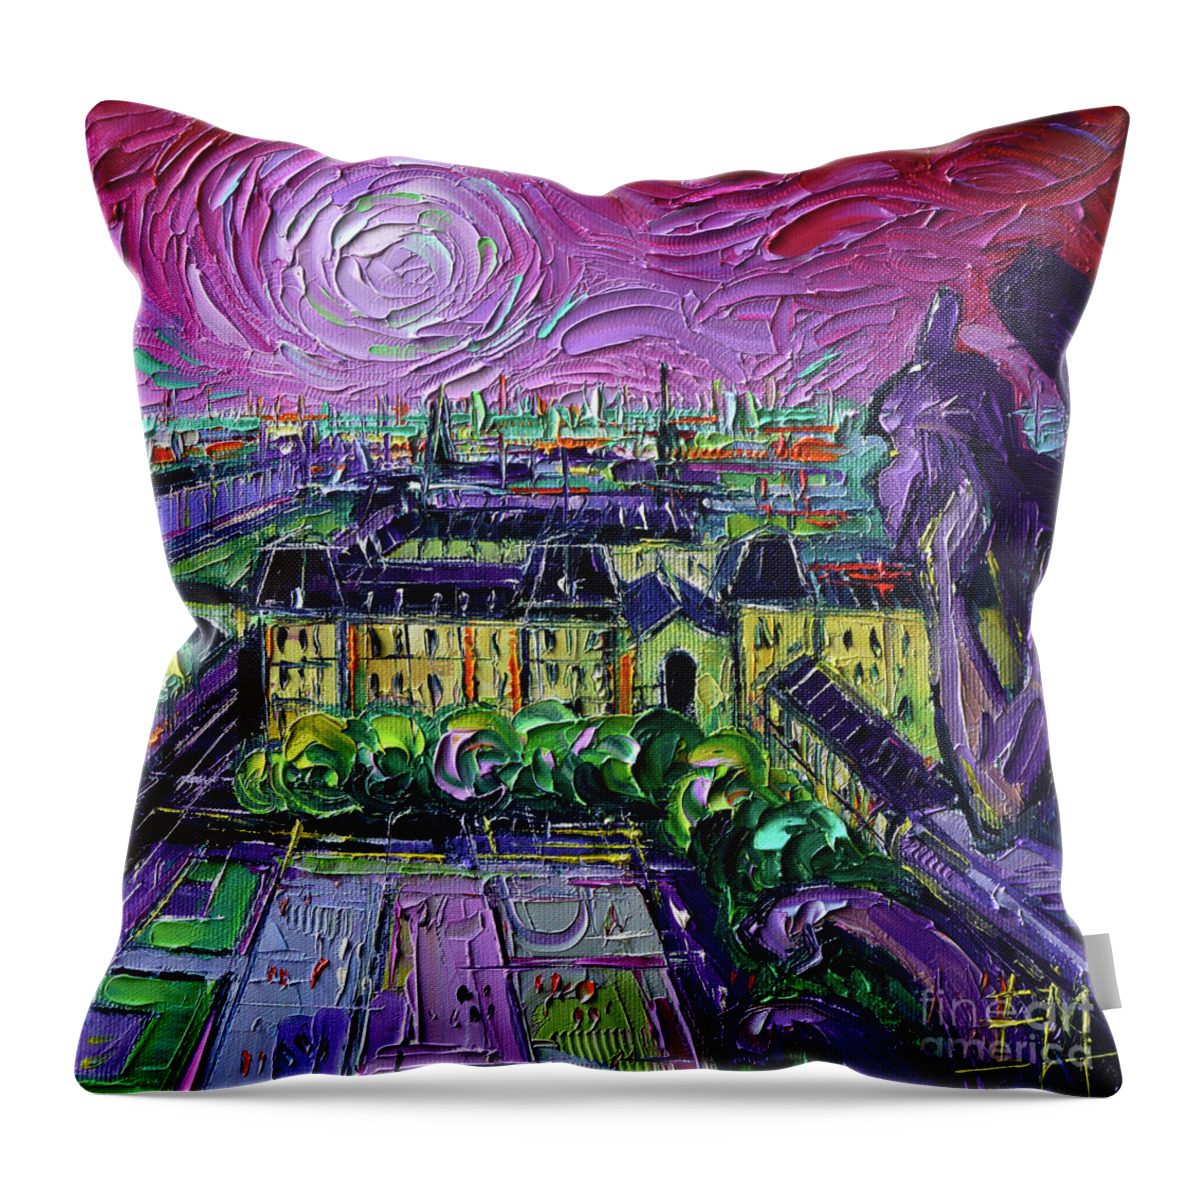 Paris Gargoyle Throw Pillow featuring the painting PARIS VIEW WITH GARGOYLES Diptych oil painting right panel by Mona Edulesco